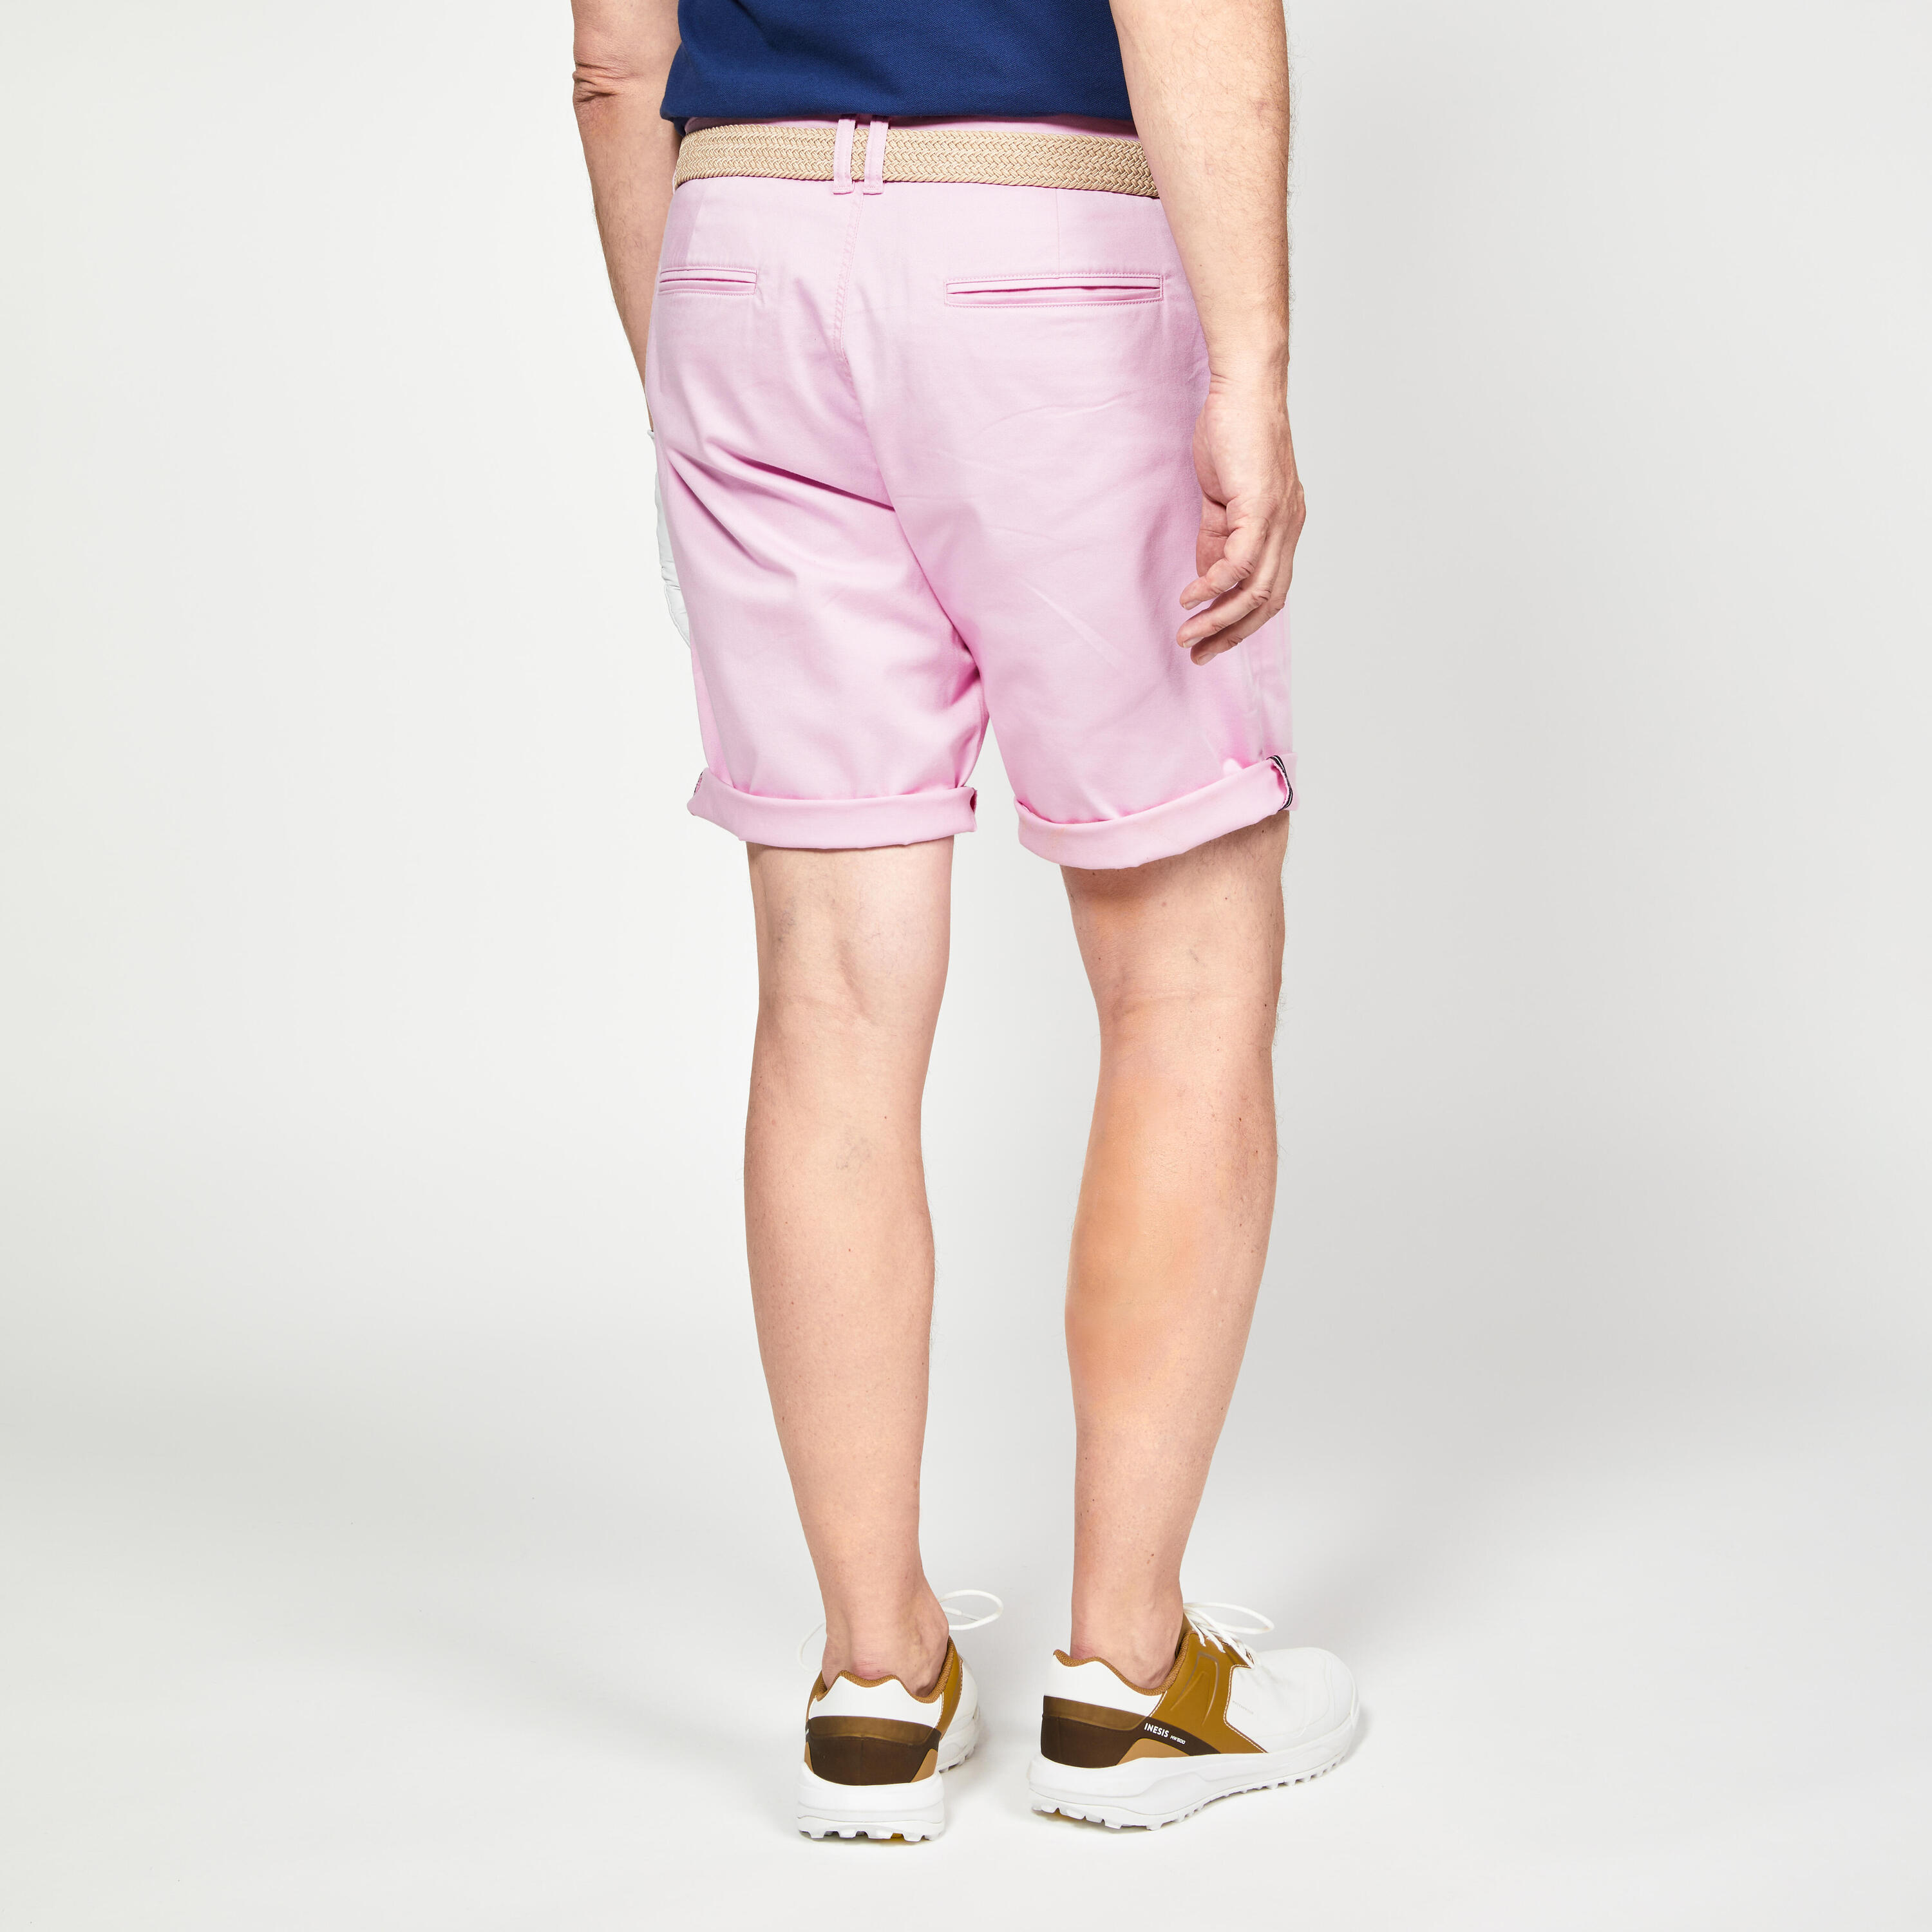 Men's golf chino shorts - MW500 light pink 2/4